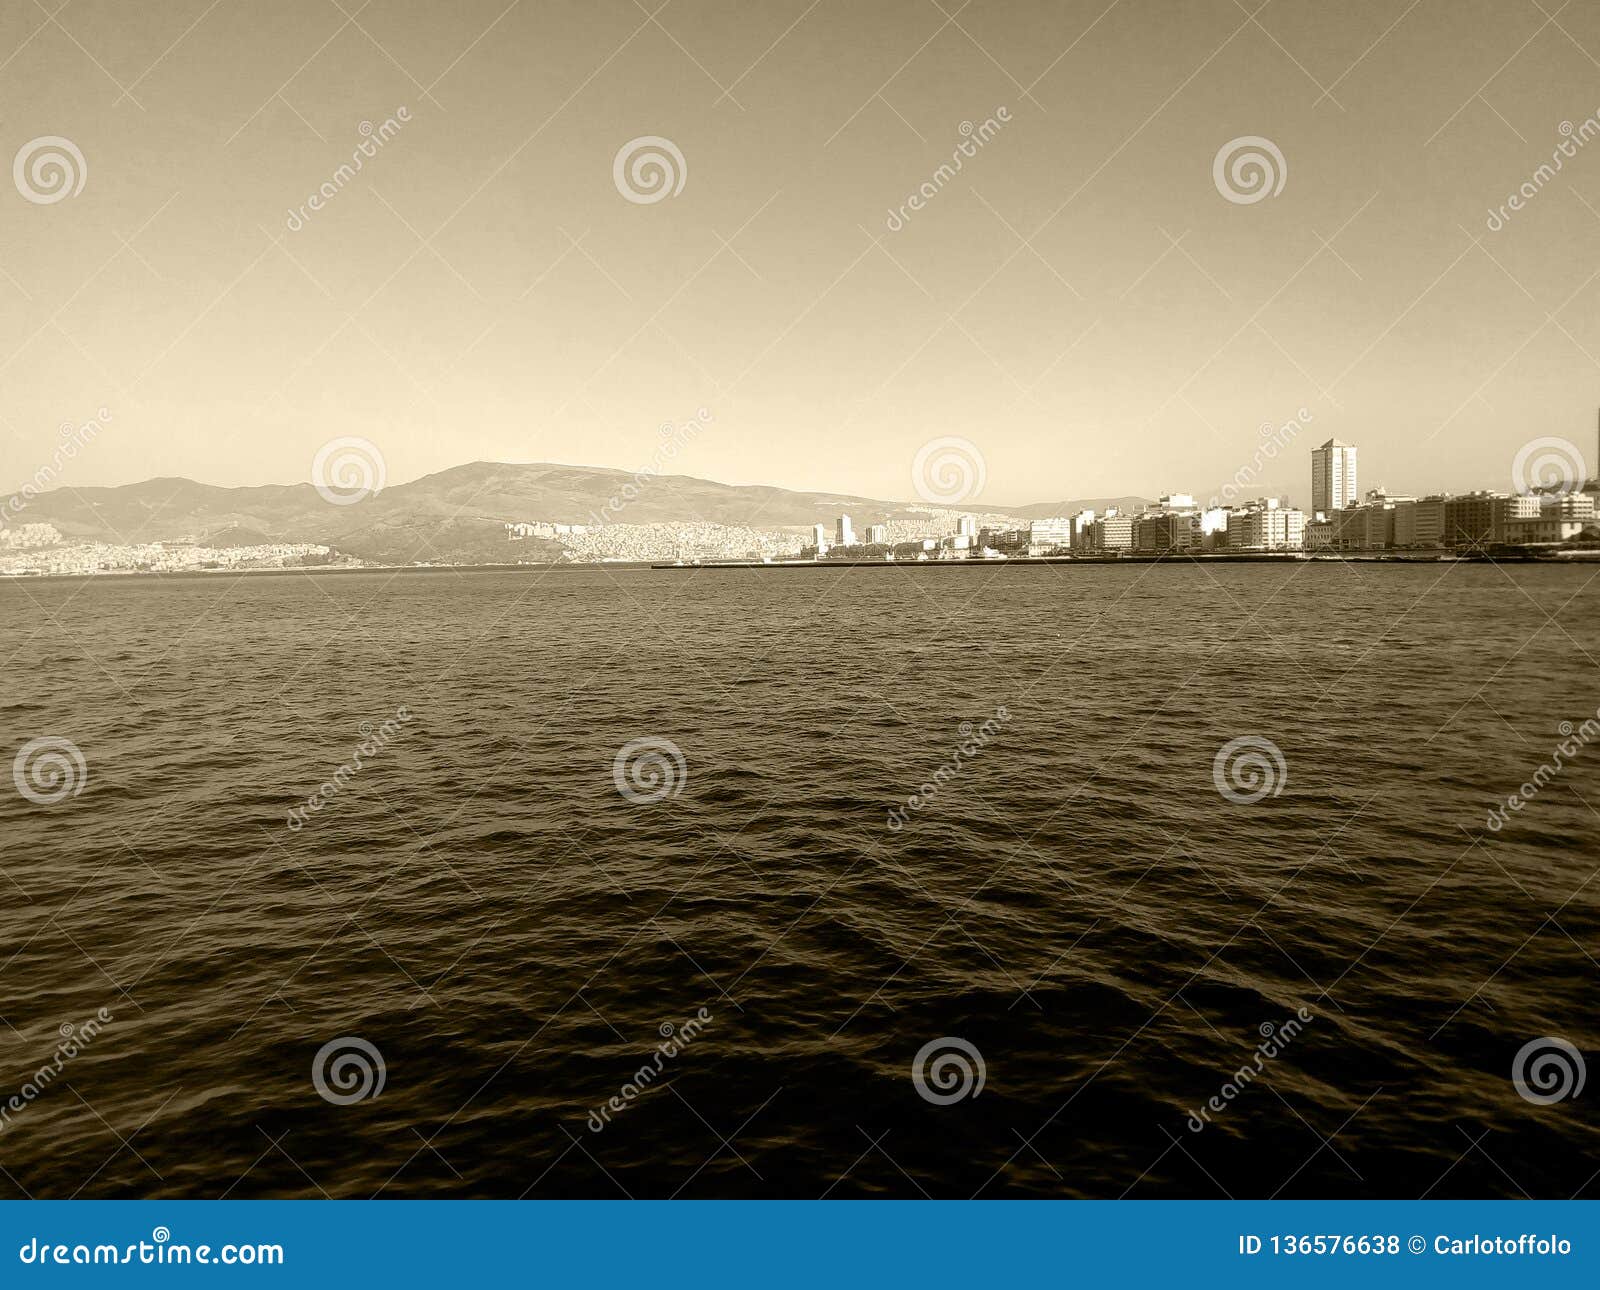 cityscape of izmir - alsancak turkey from the sea - sepia photography